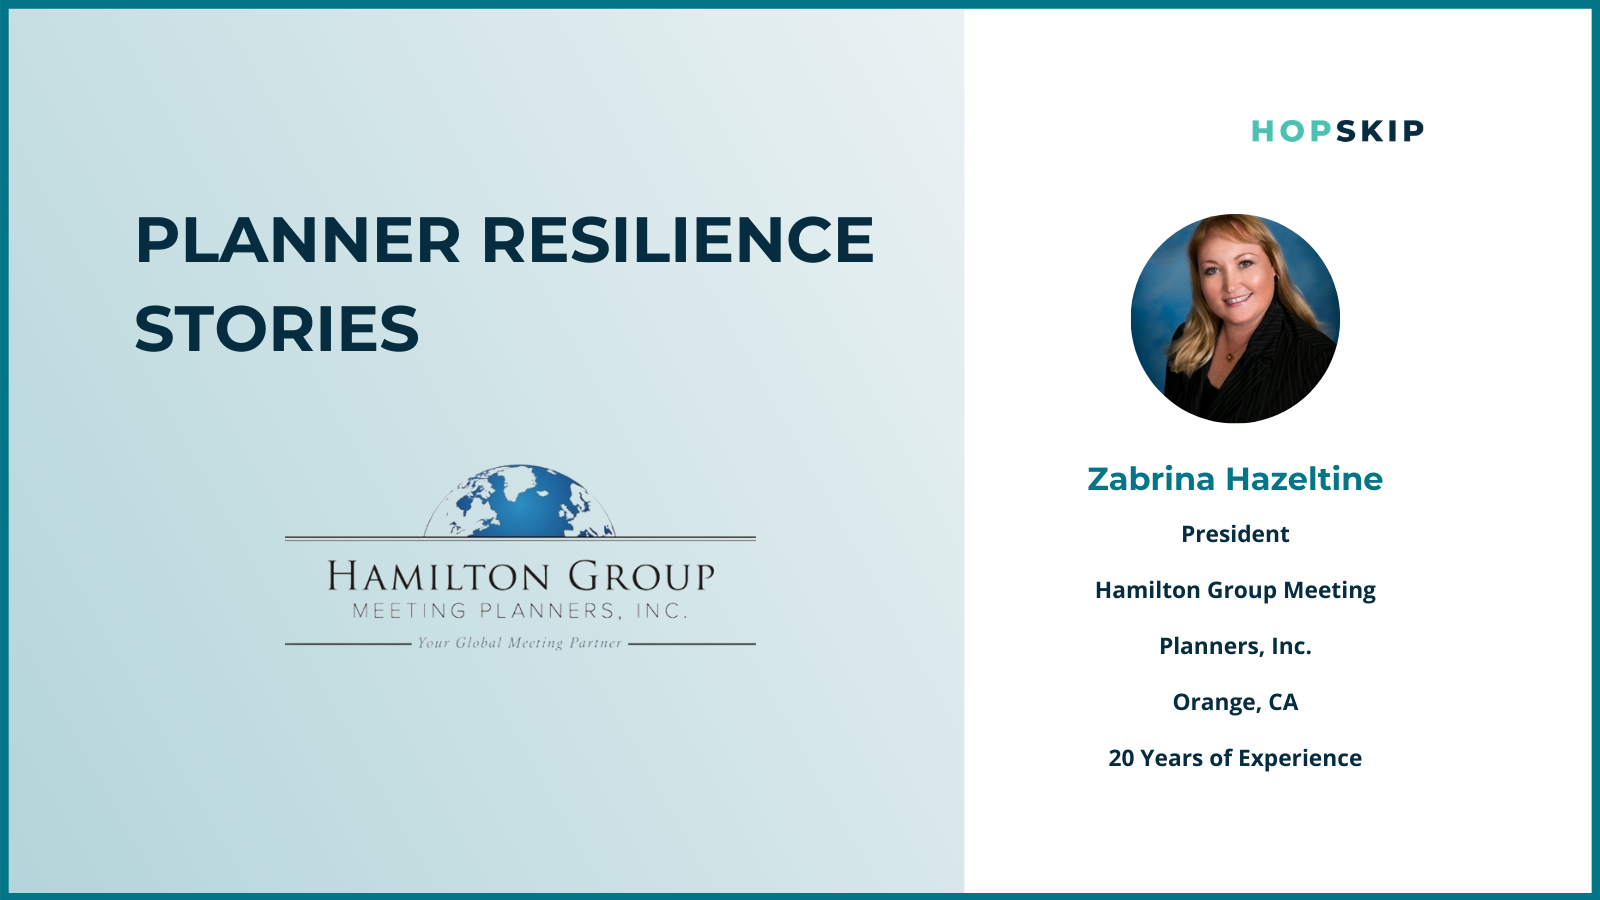 HopSkip Profile of Zabrina Hazeltine Owner and President of Hamilton Group Meeting Planners